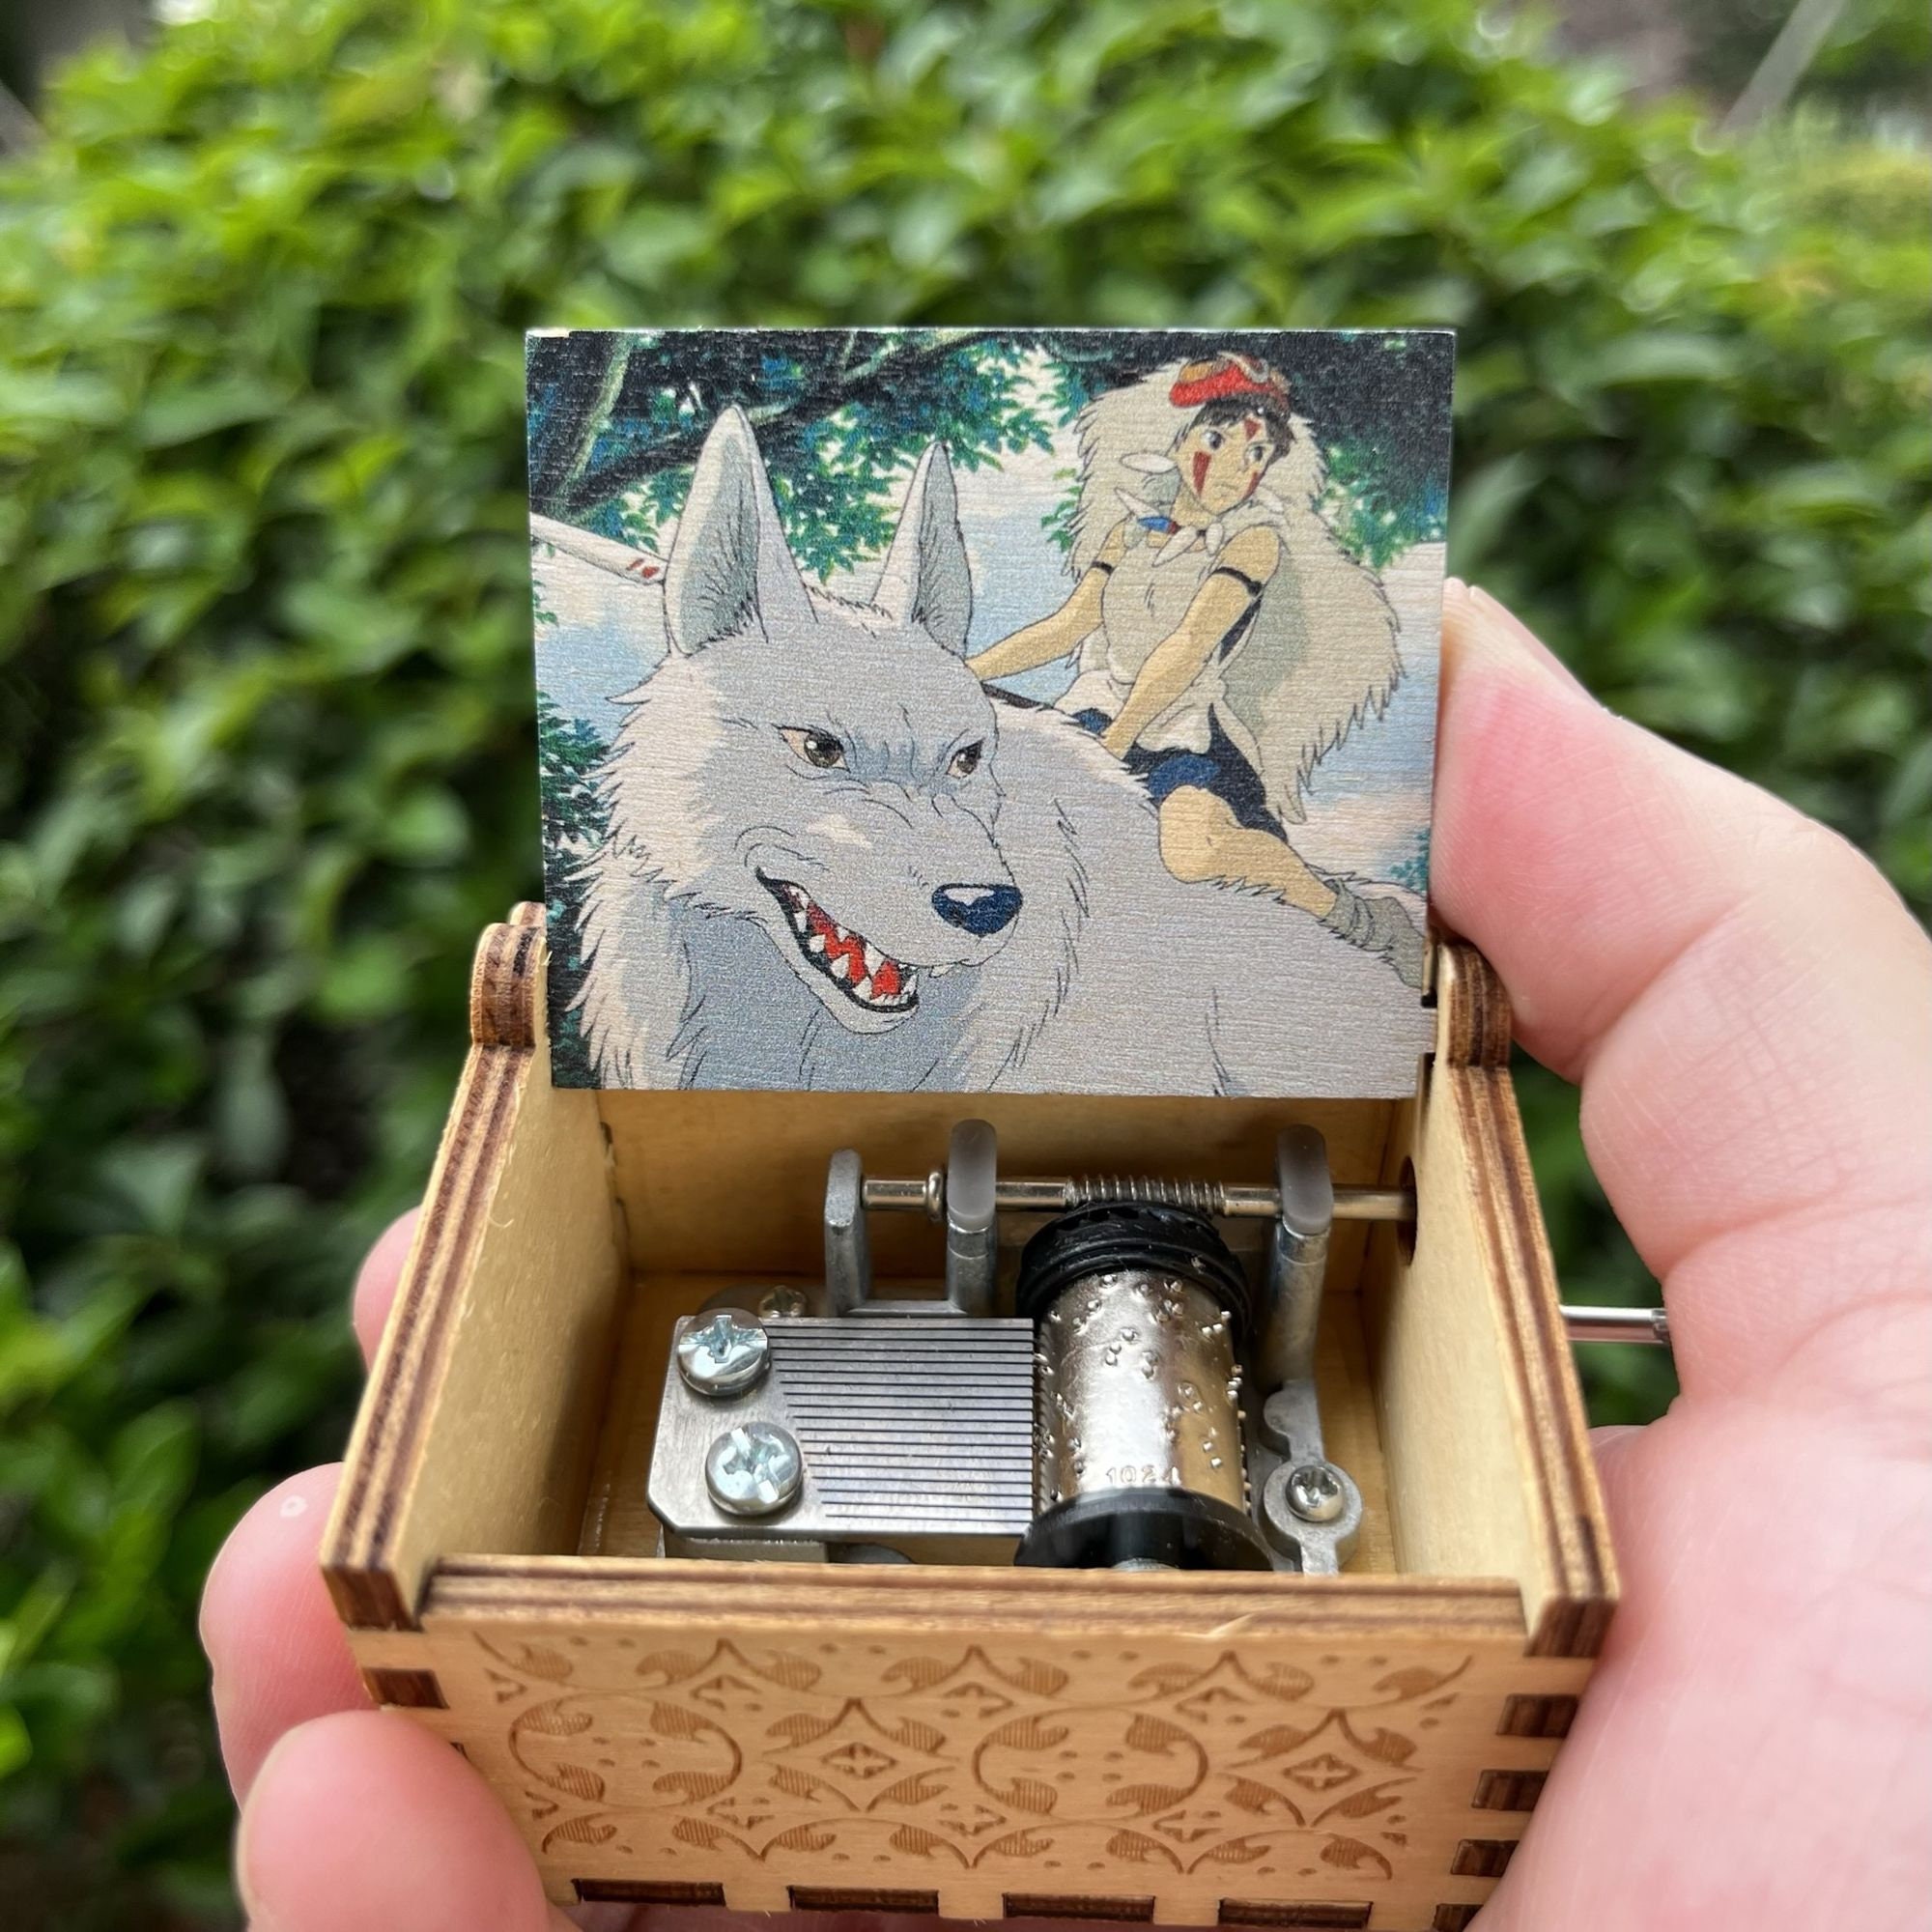 Promised Neverland Music Box, Wind Totoro Music Box, Inuyasha